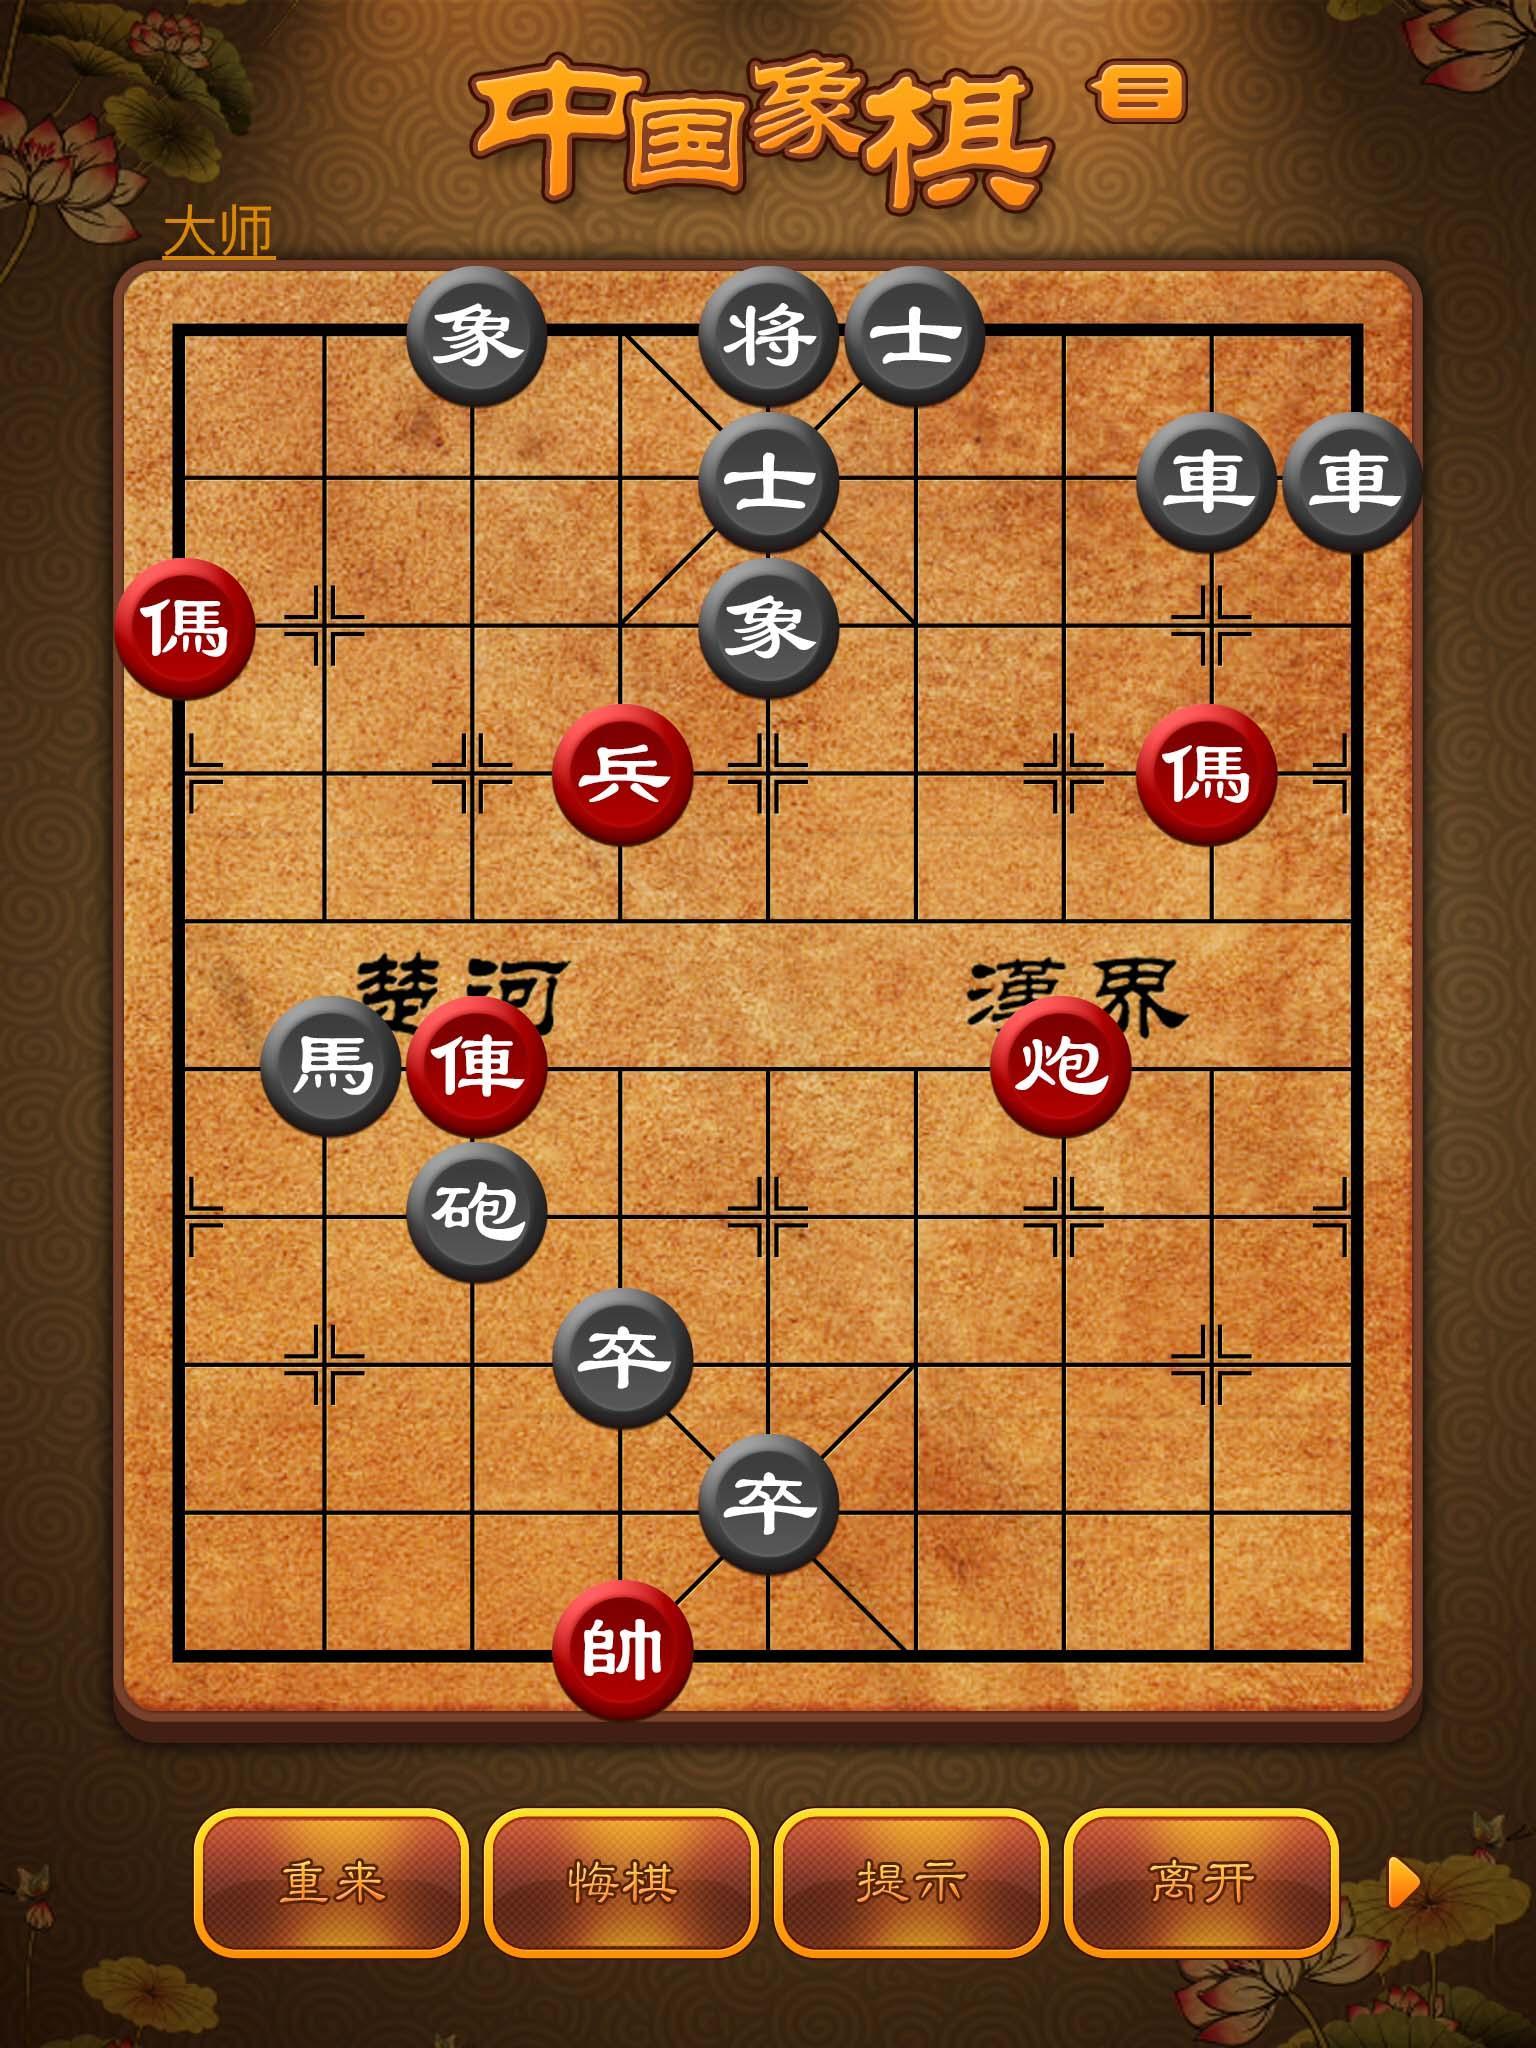 Chinese Chess, Xiangqi - many endgame and replay 3.9.6 Screenshot 13